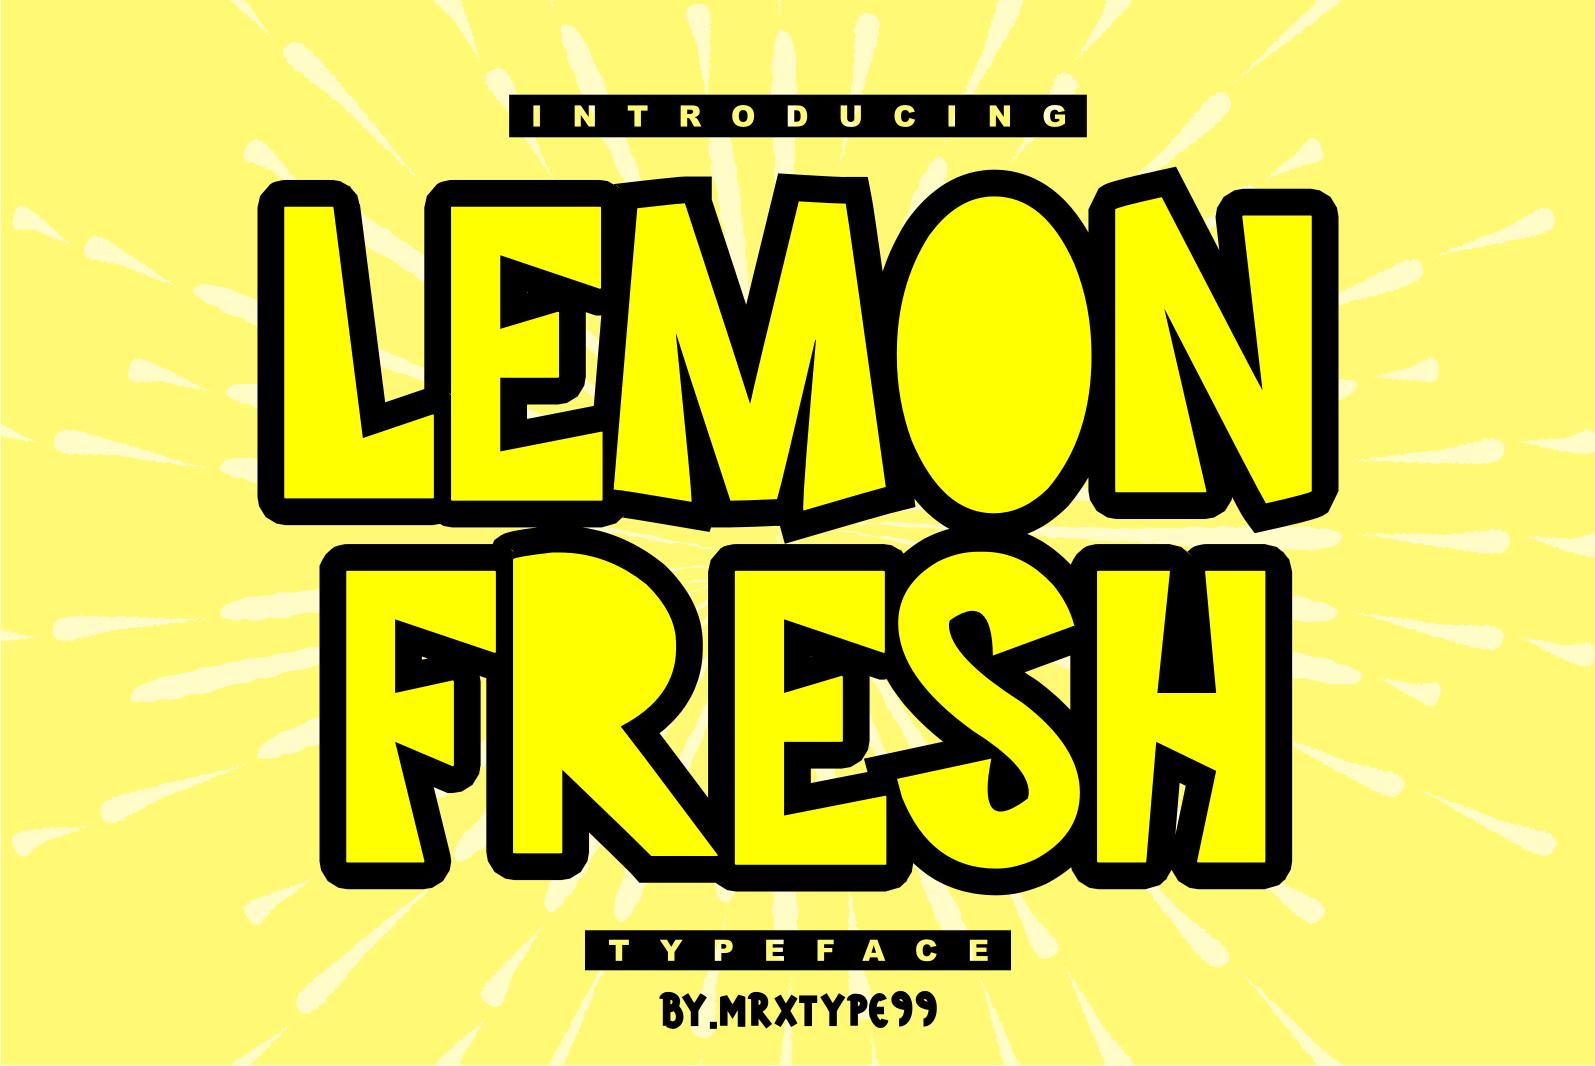 Lemon Fresh Font